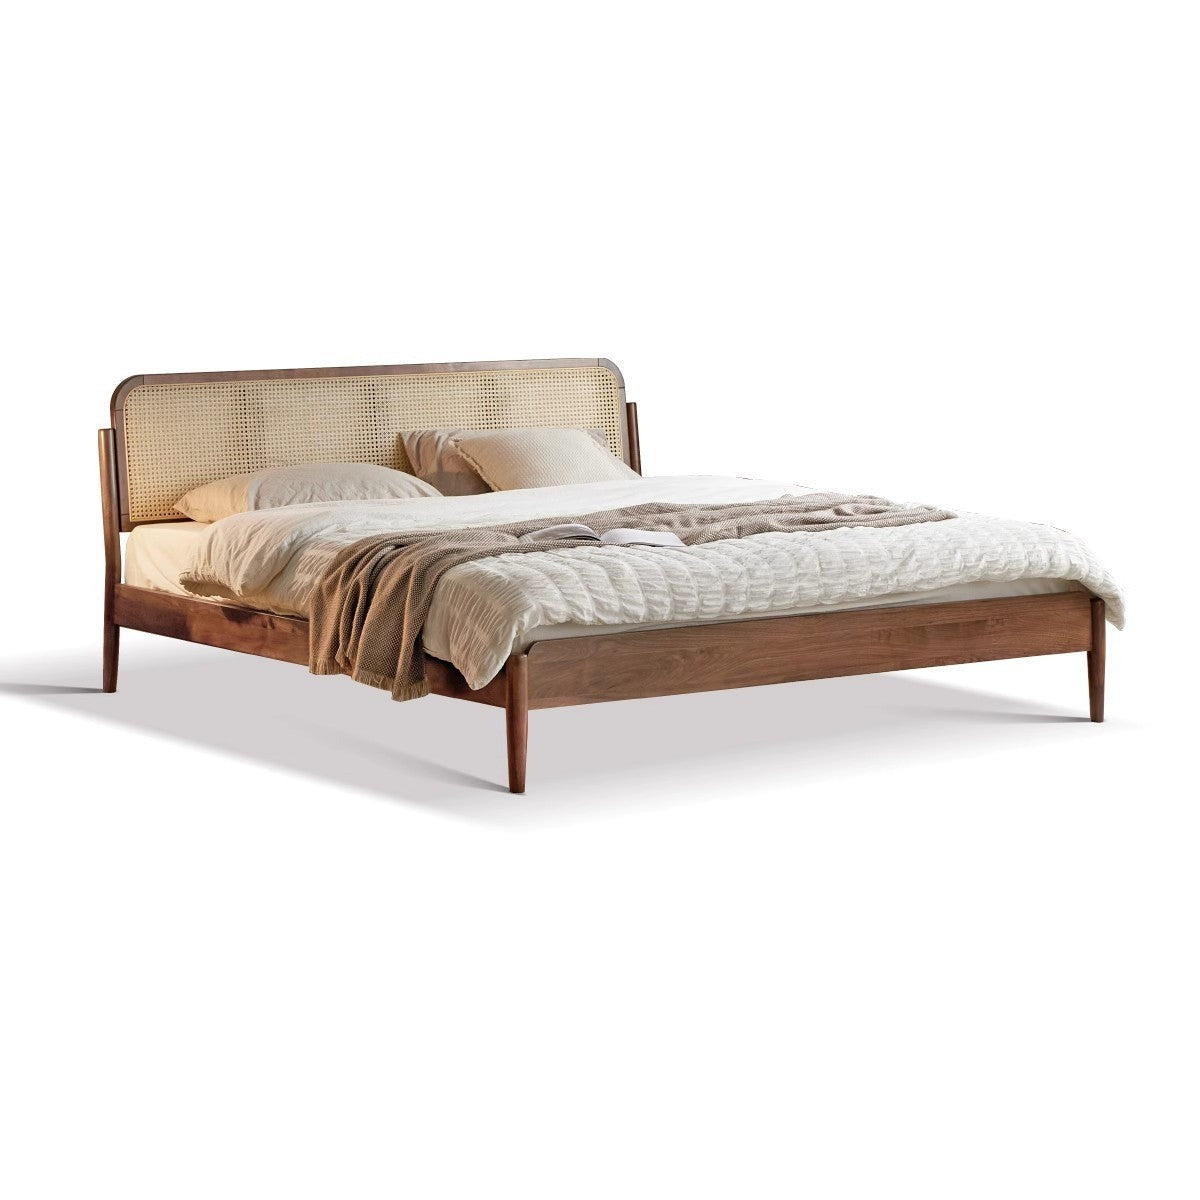 North American Black Walnut Solid wood rattan bed"